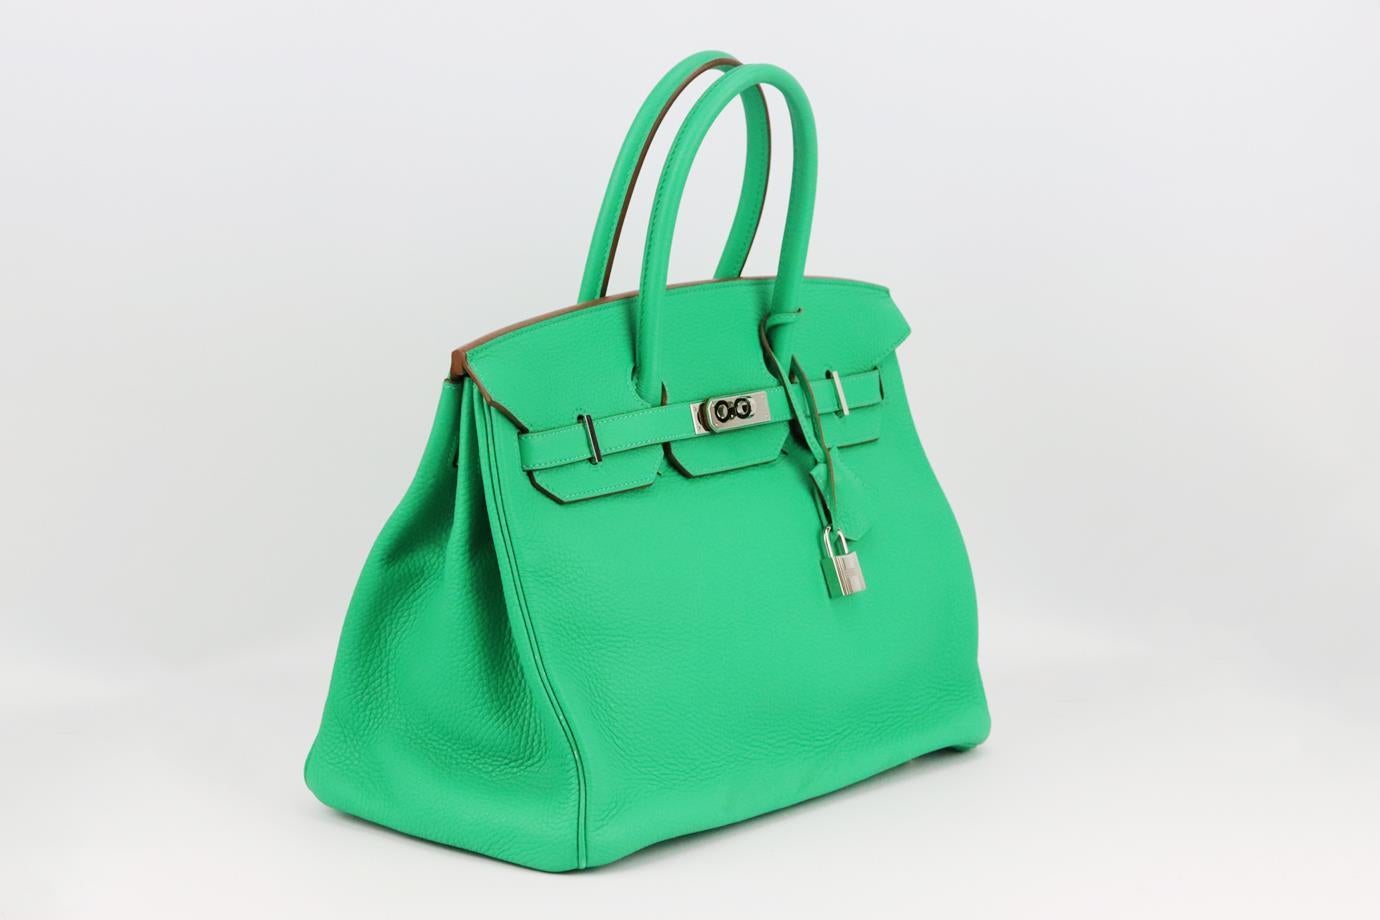 Hermès 2012 Birkin 35cm Togo Leather Bag en vente 1